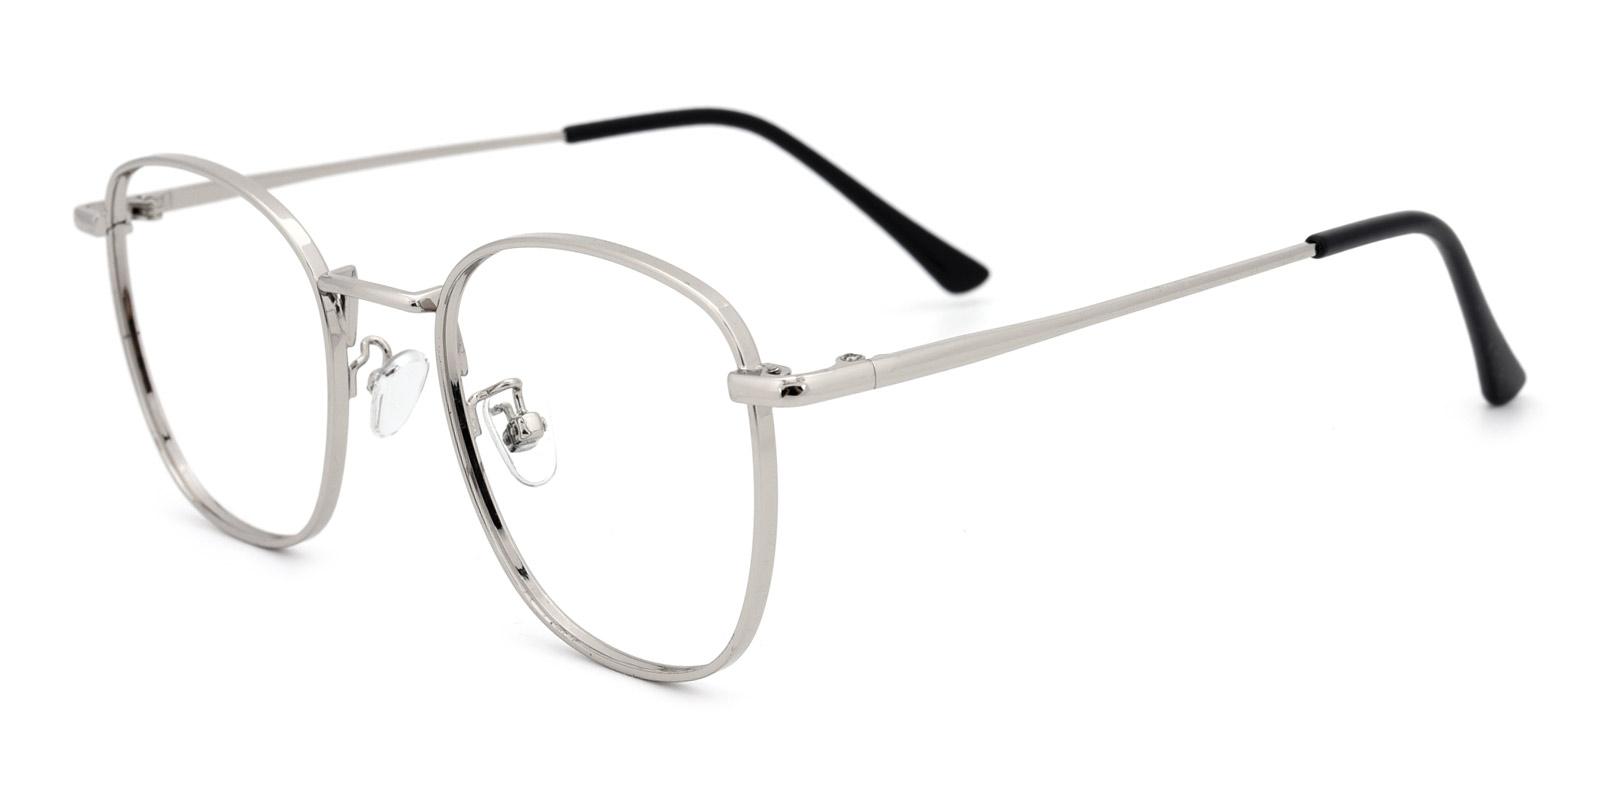 Richard-Silver-Square-Metal-Eyeglasses-detail